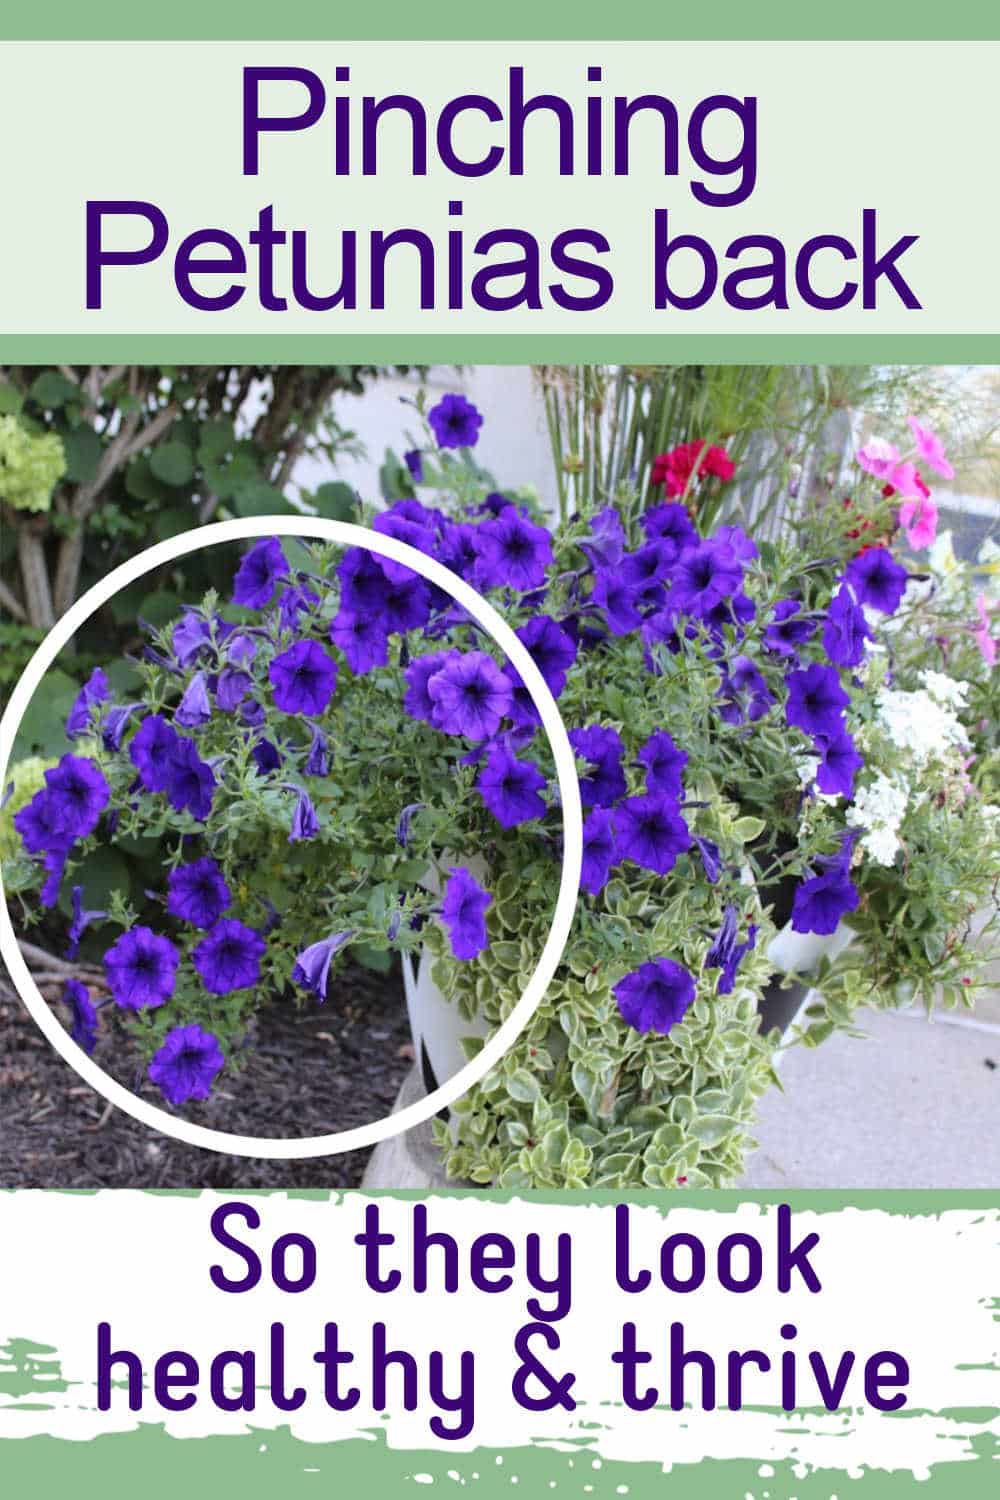 leggy petunias circled with text overlay stating Pinching petunias back.